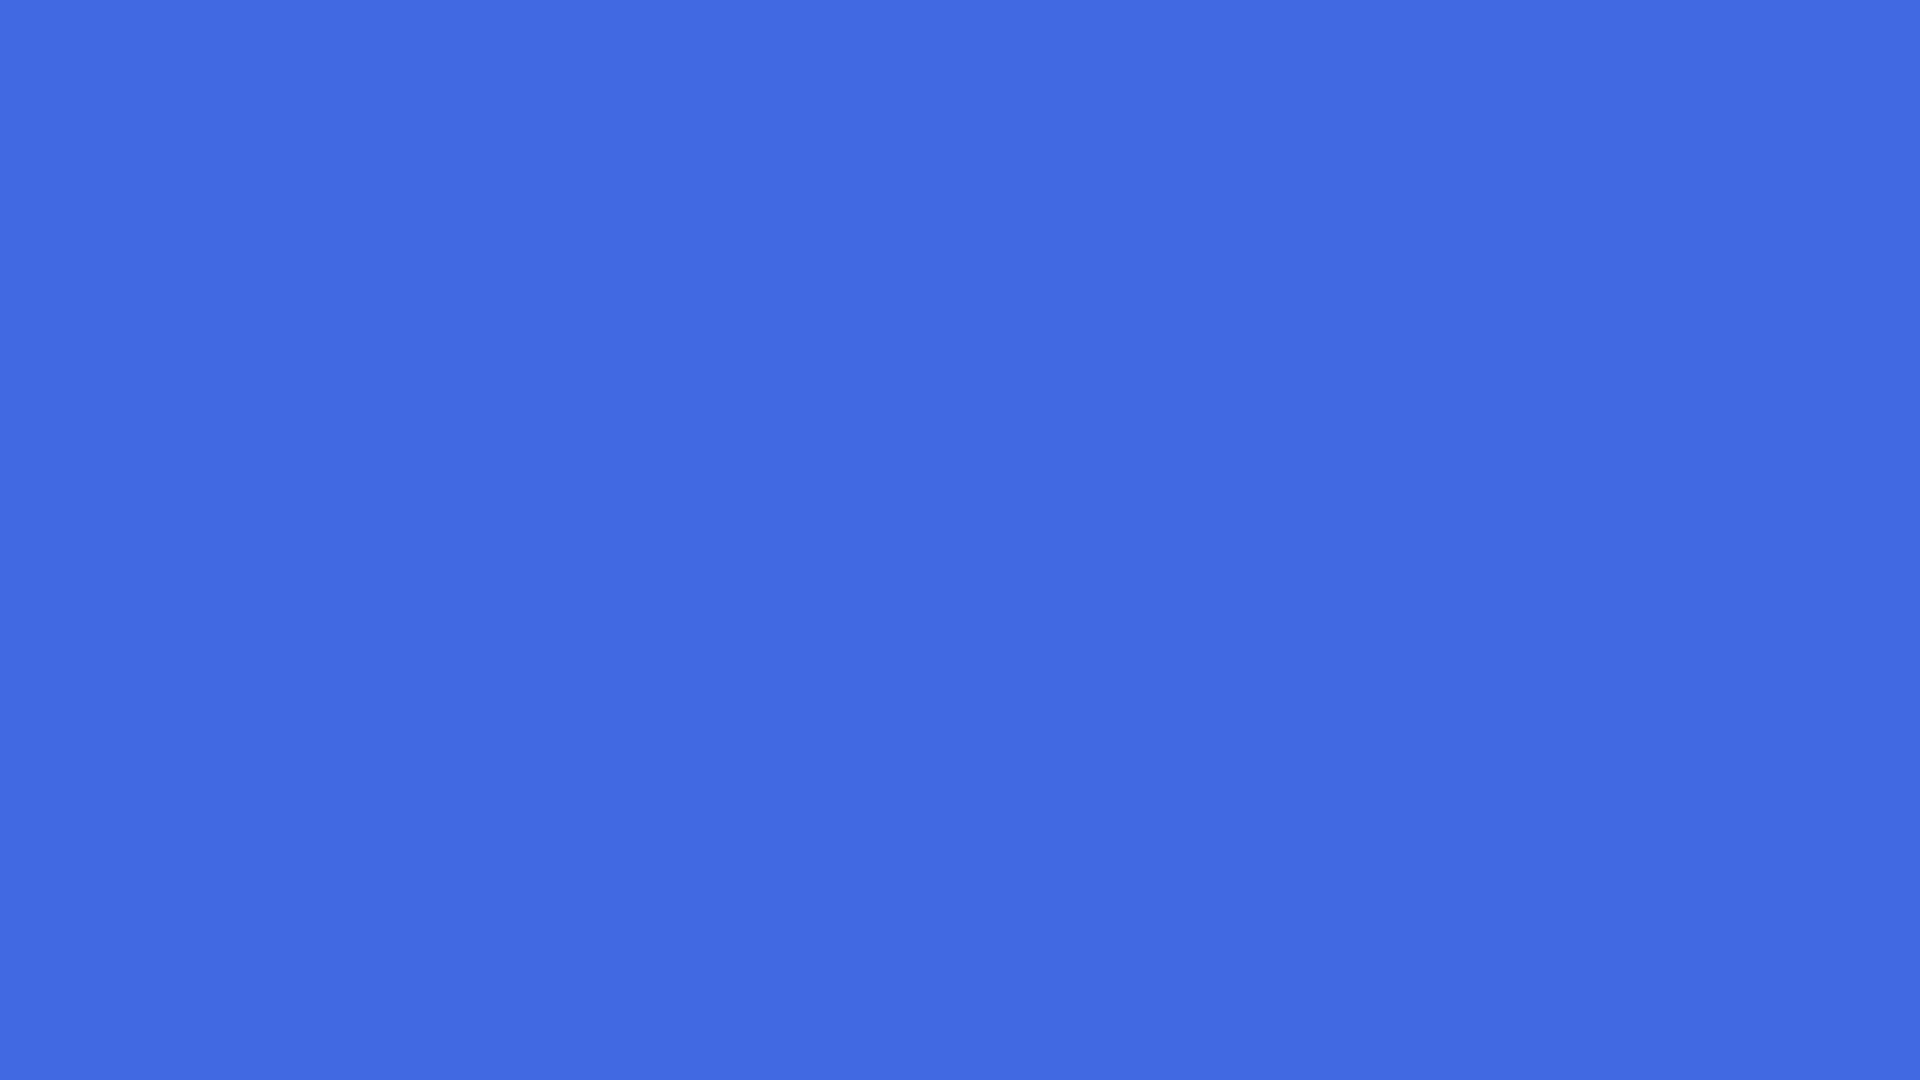 1920x1080 Royal Blue Web Solid Color Background